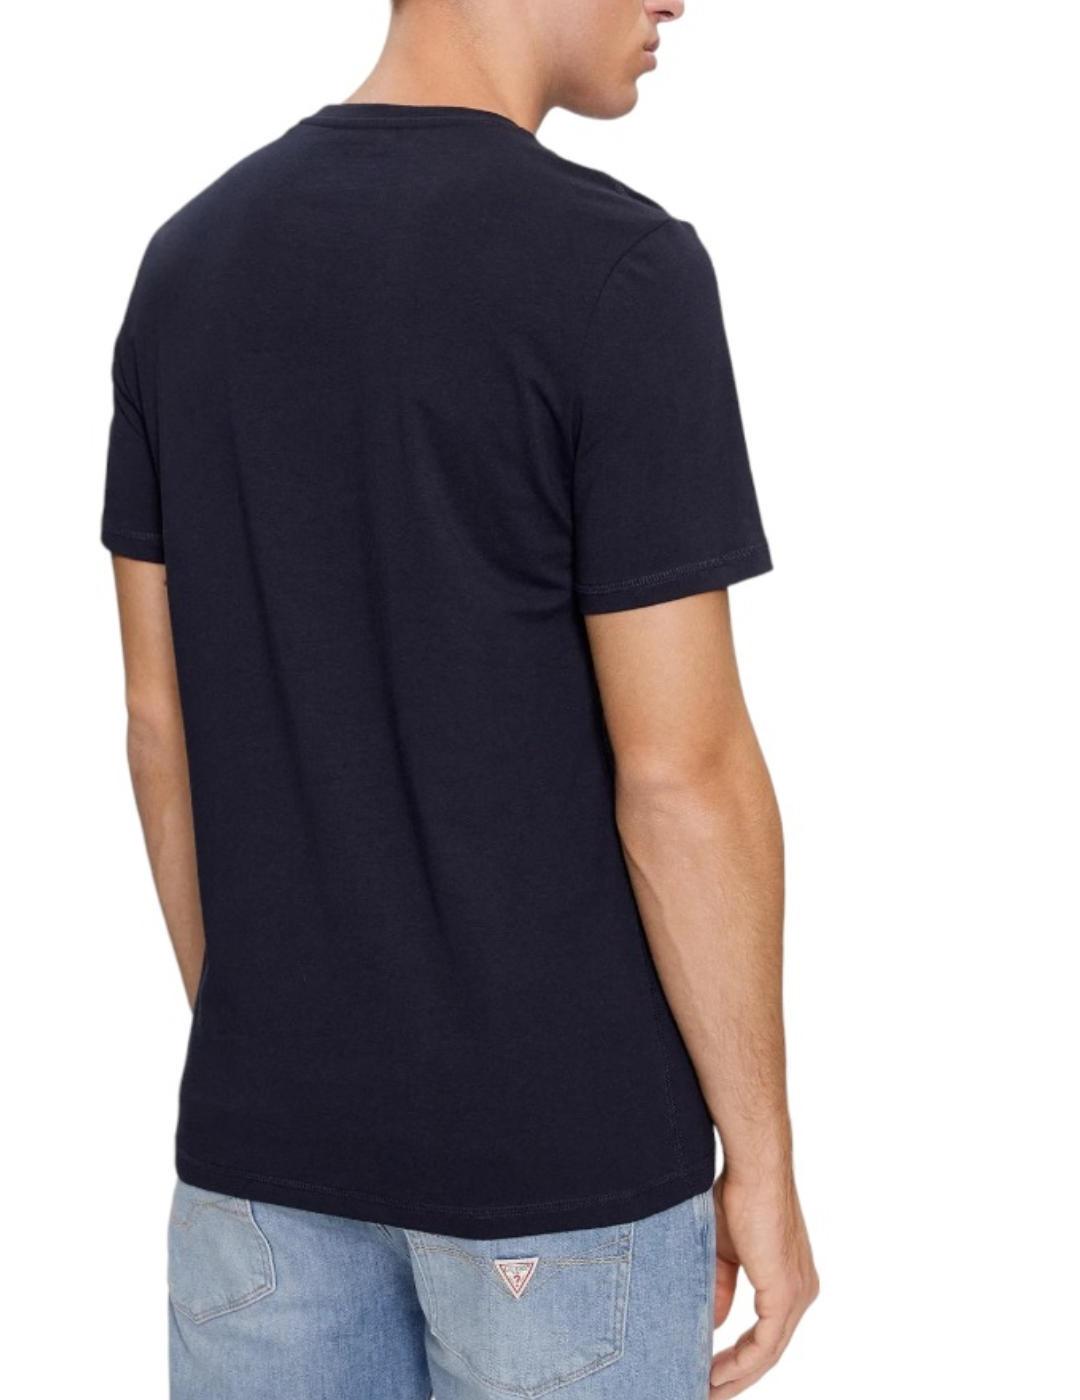 Camiseta Guess Triangle azul marino manga corta para hombre